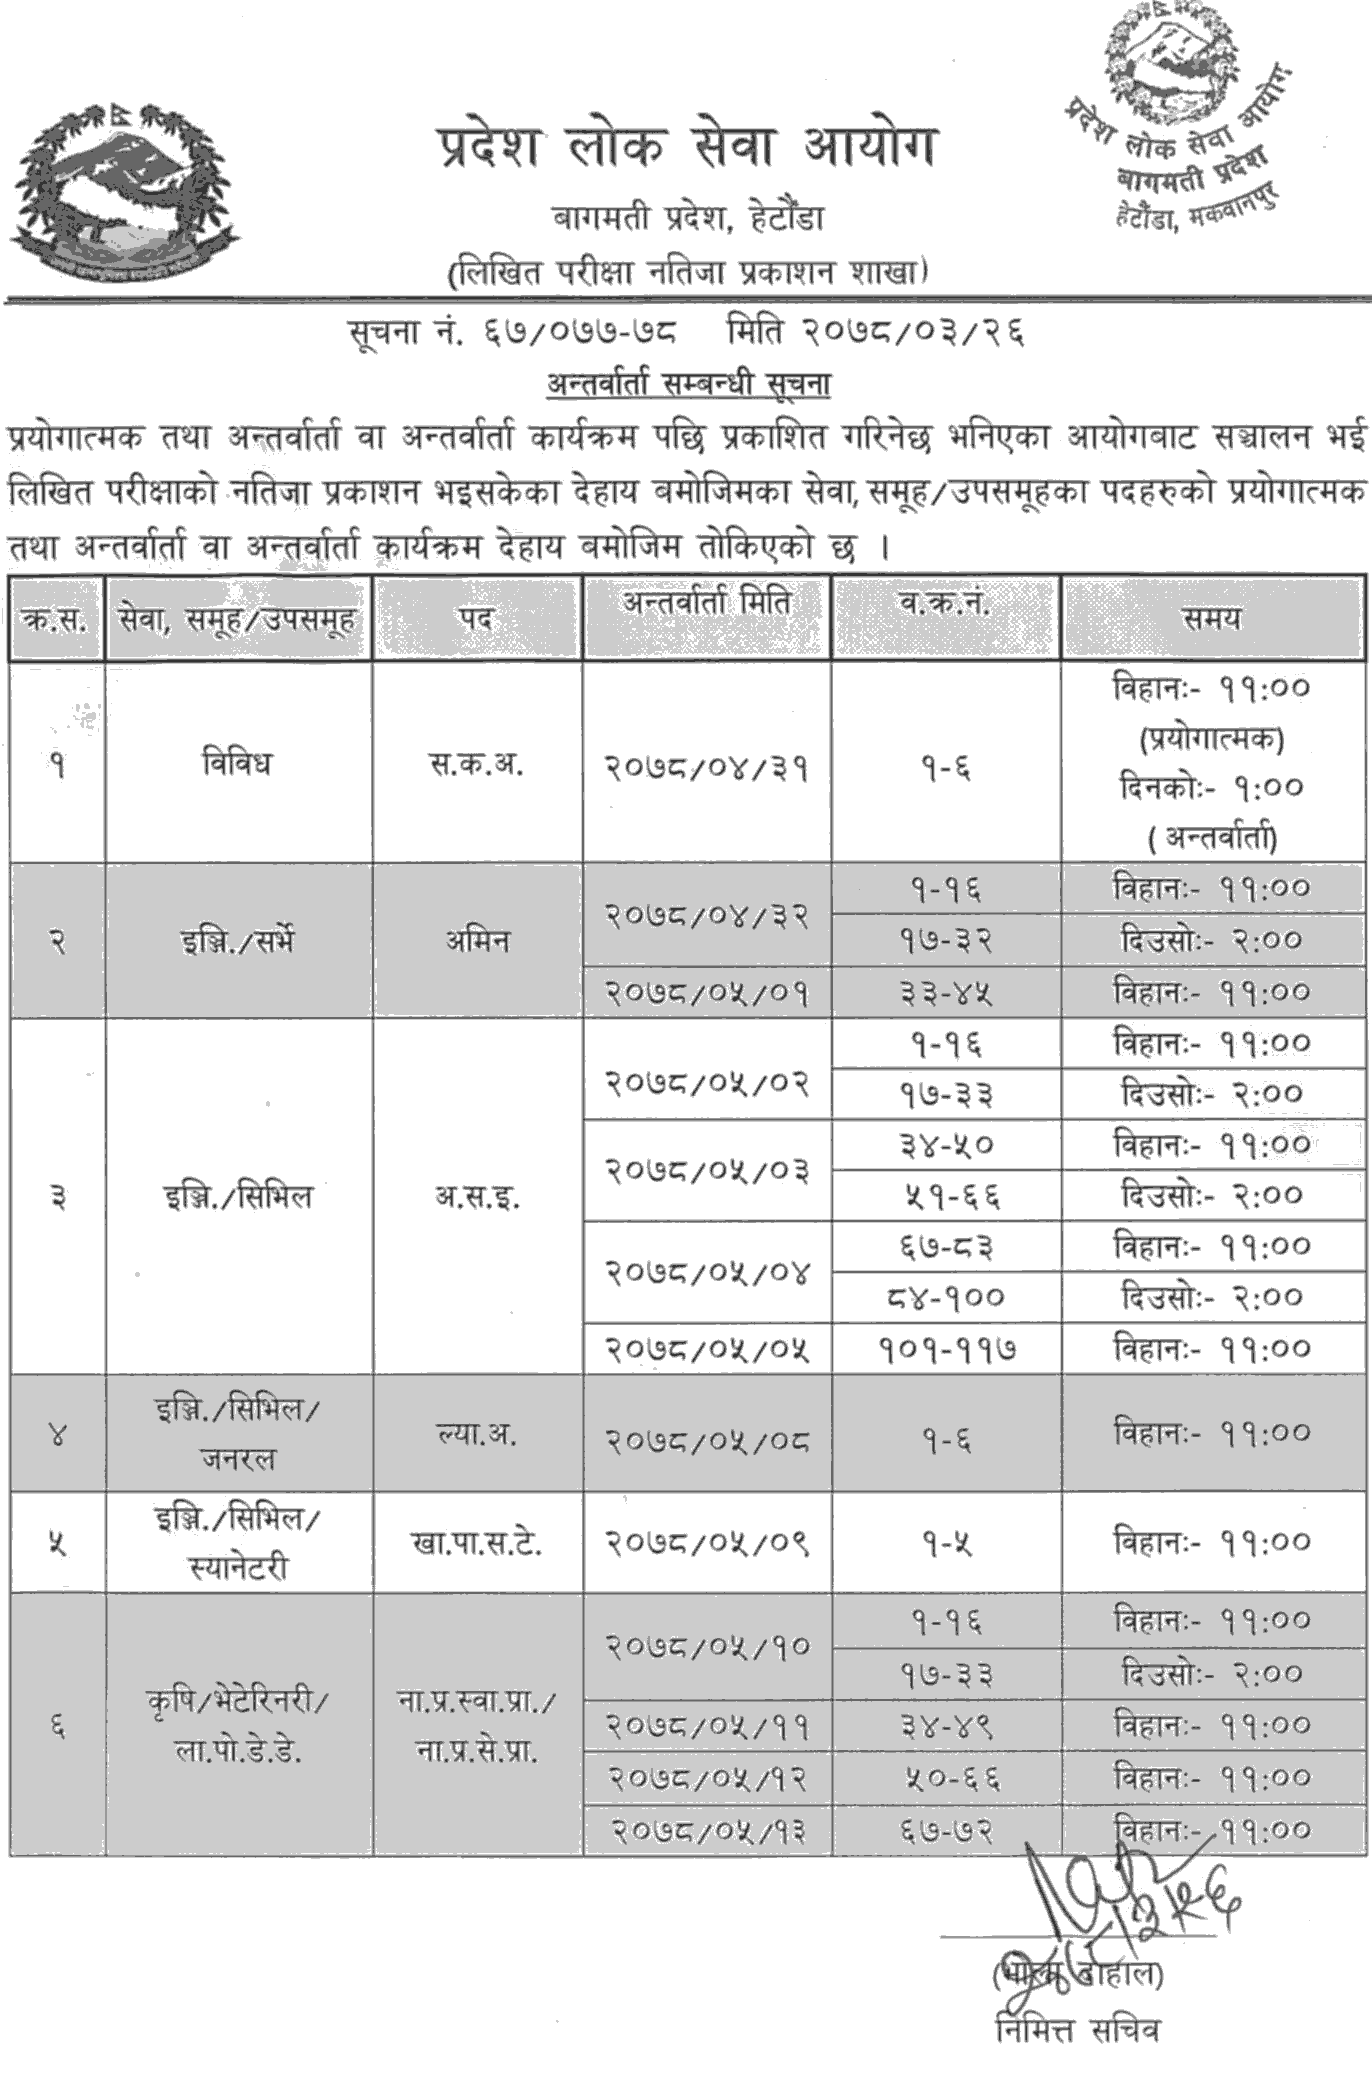 Bagmati Pradesh Lok Sewa Aayog Published Interview Schedule of Various Position